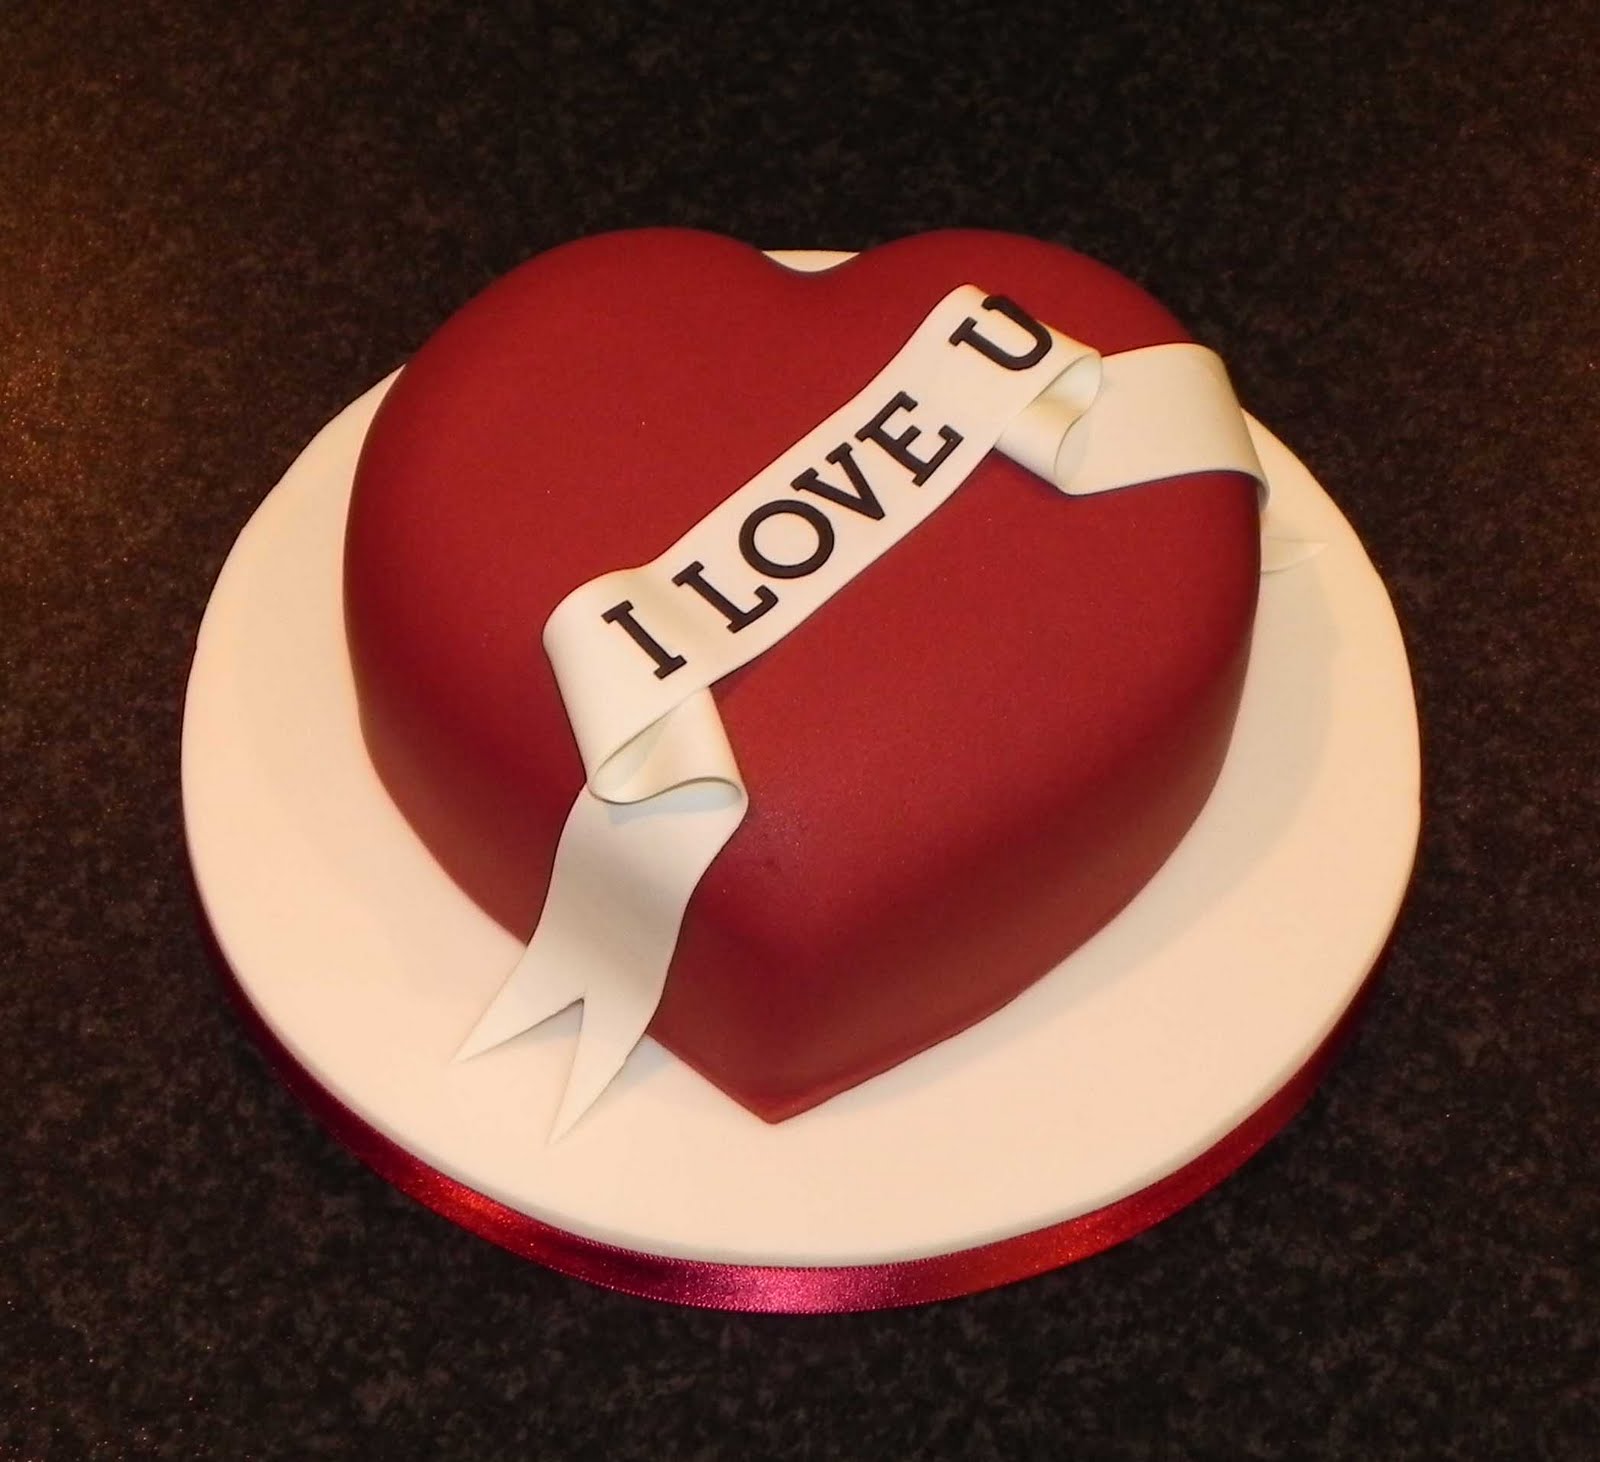 I love you cake